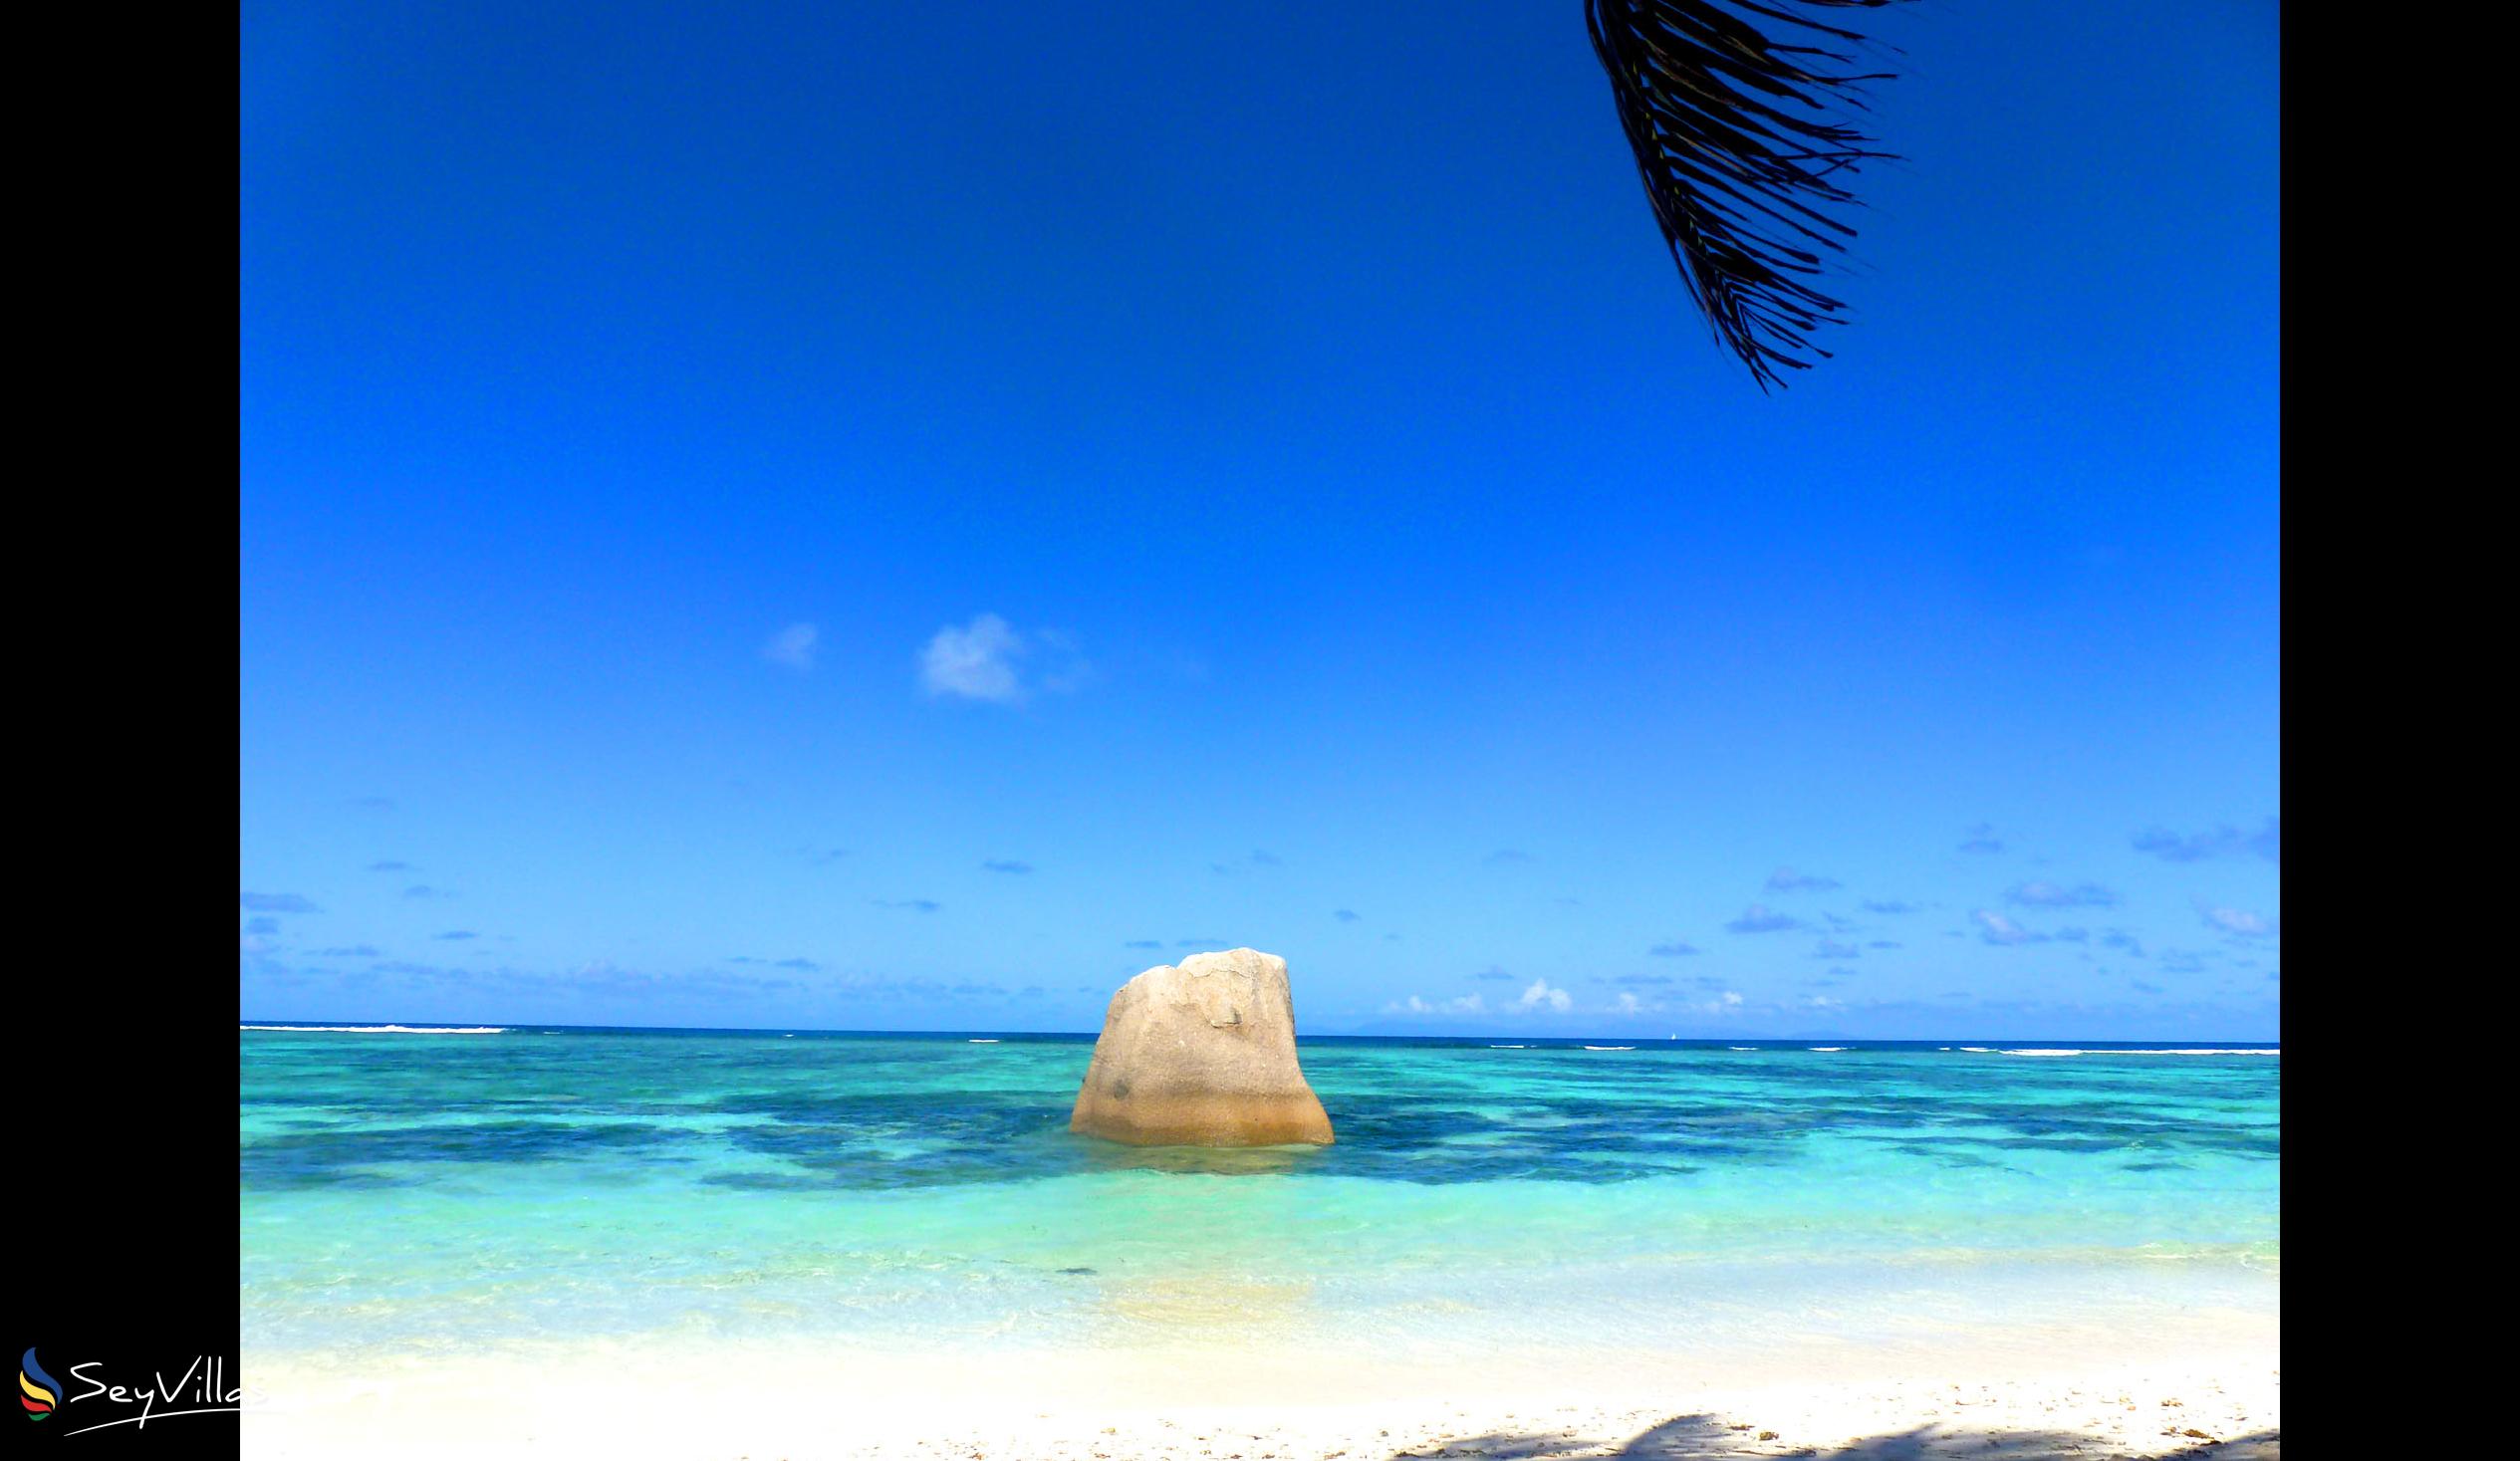 Photo 31: Le Relax Beach House - Beaches - La Digue (Seychelles)